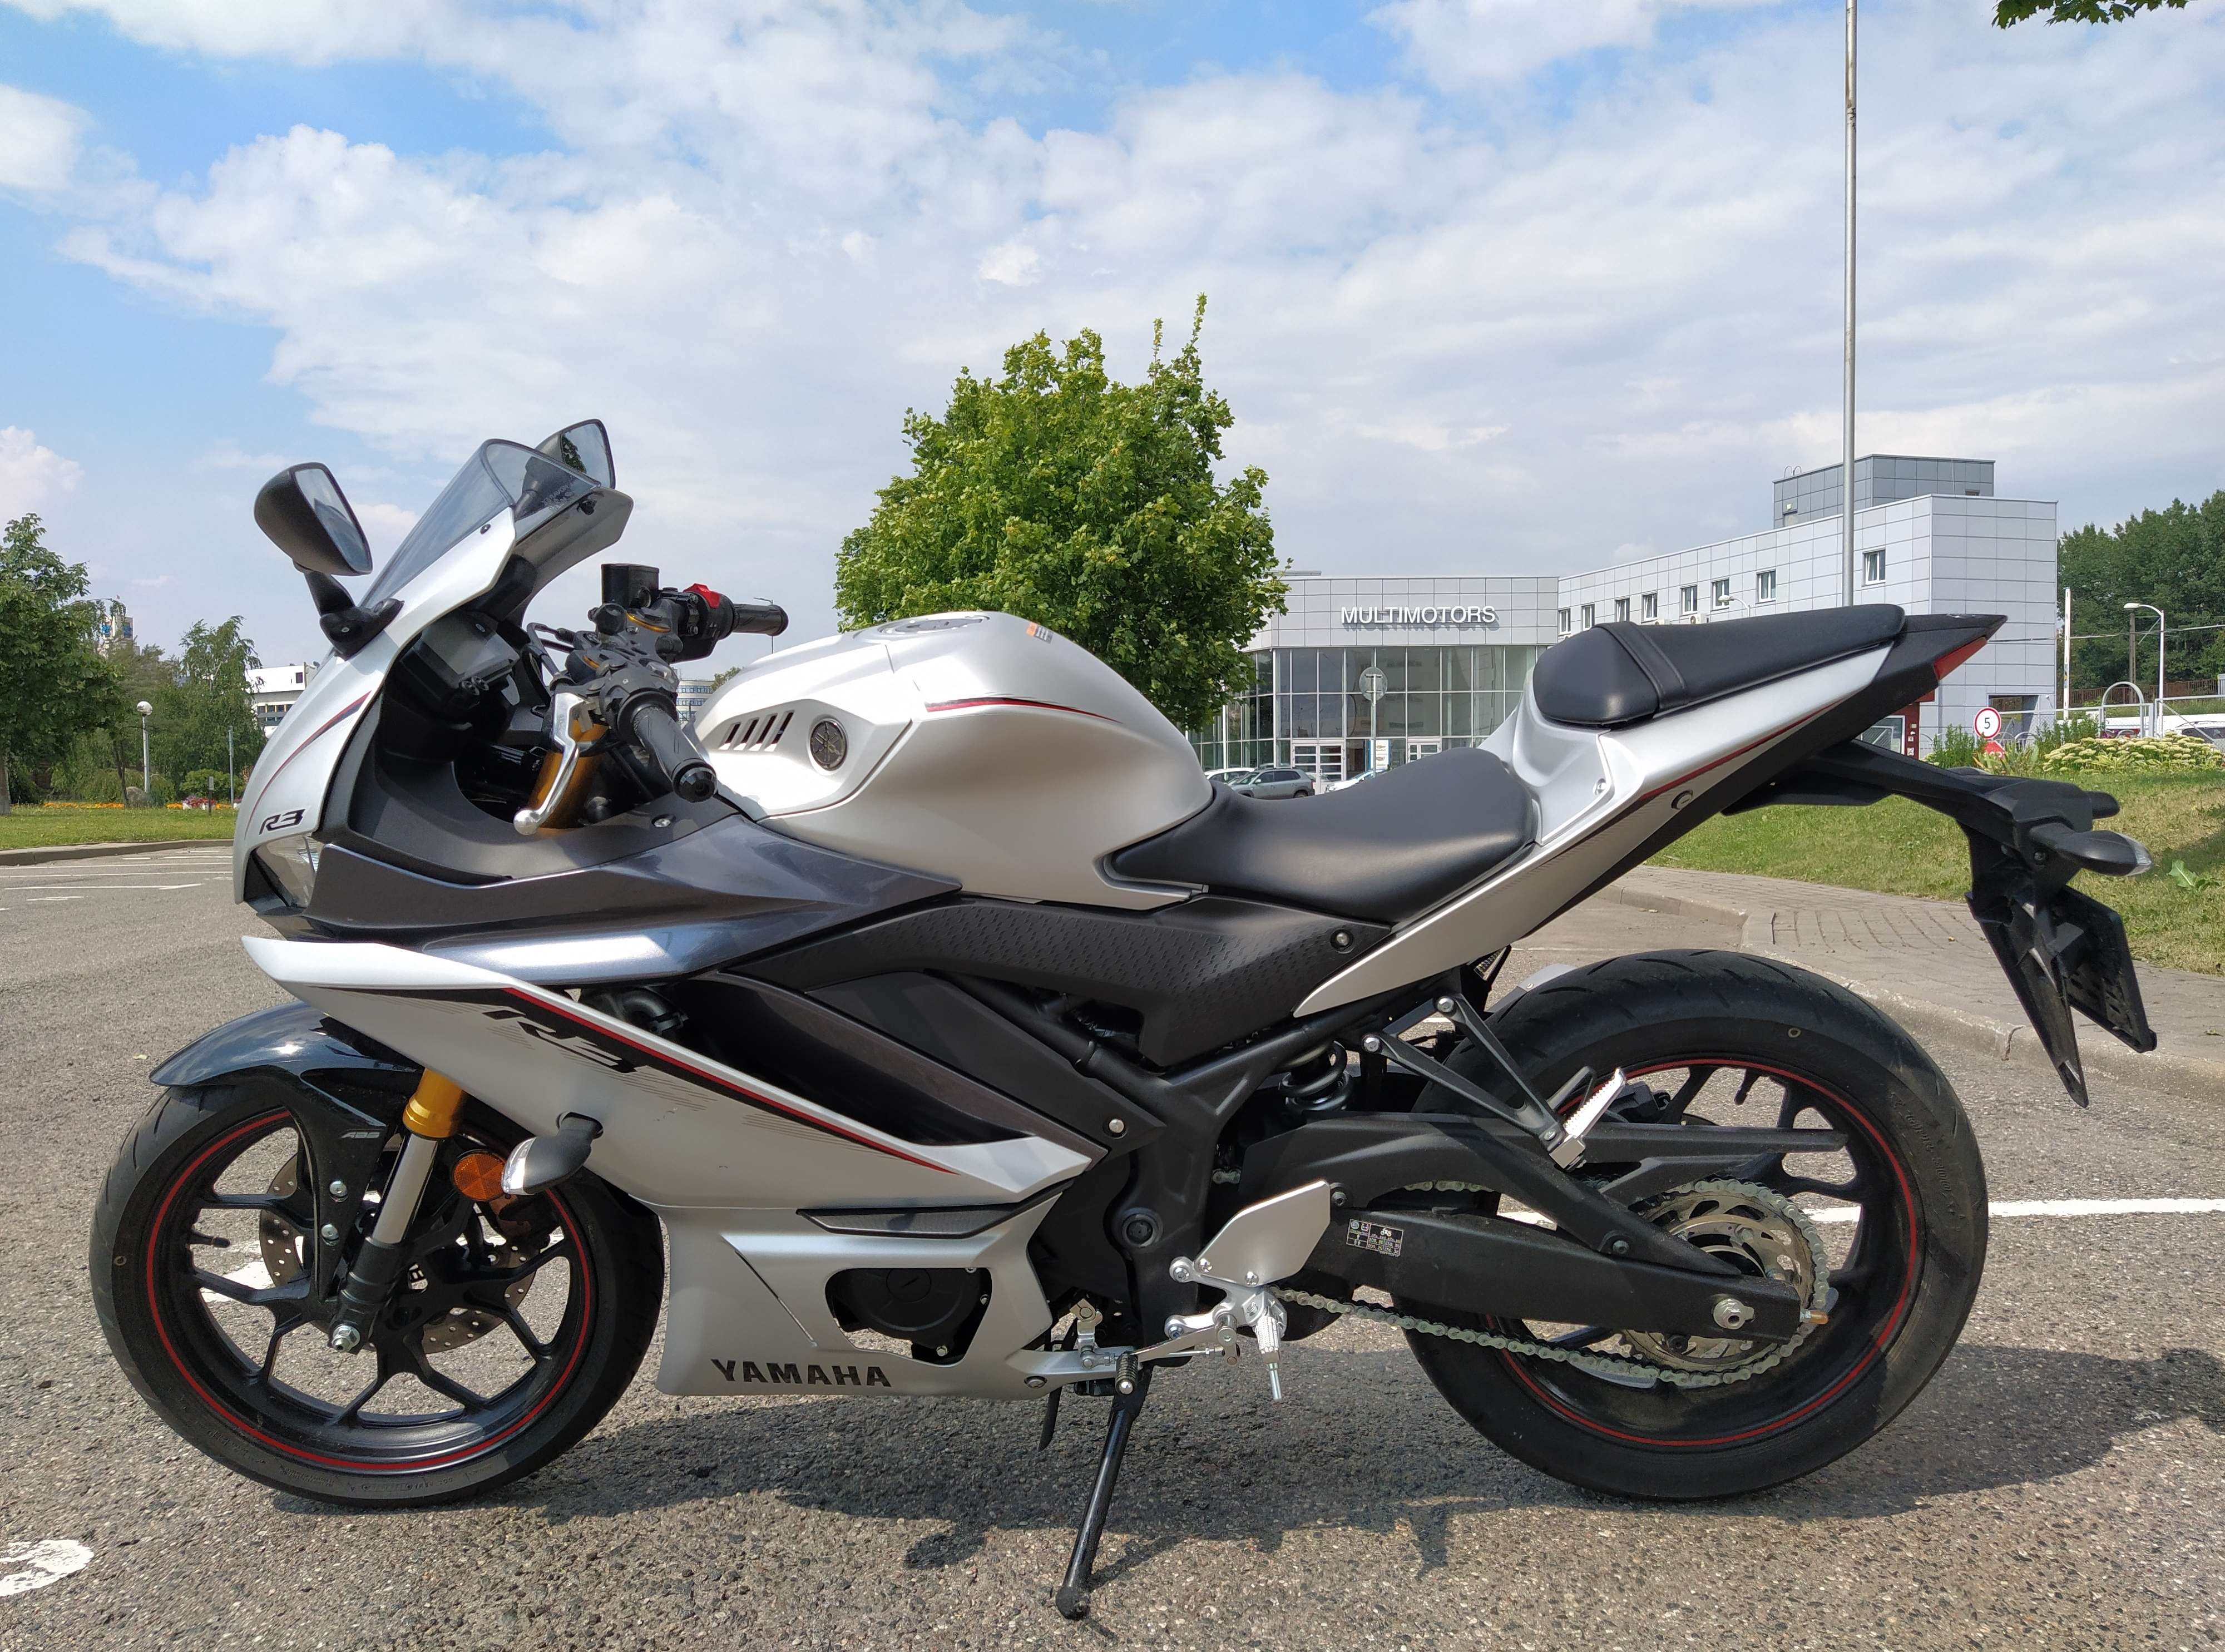 Купить мотоцикл Yamaha YZF в Беларуси в кредит - цены, характеристики, фото. в Беларуси в кредит